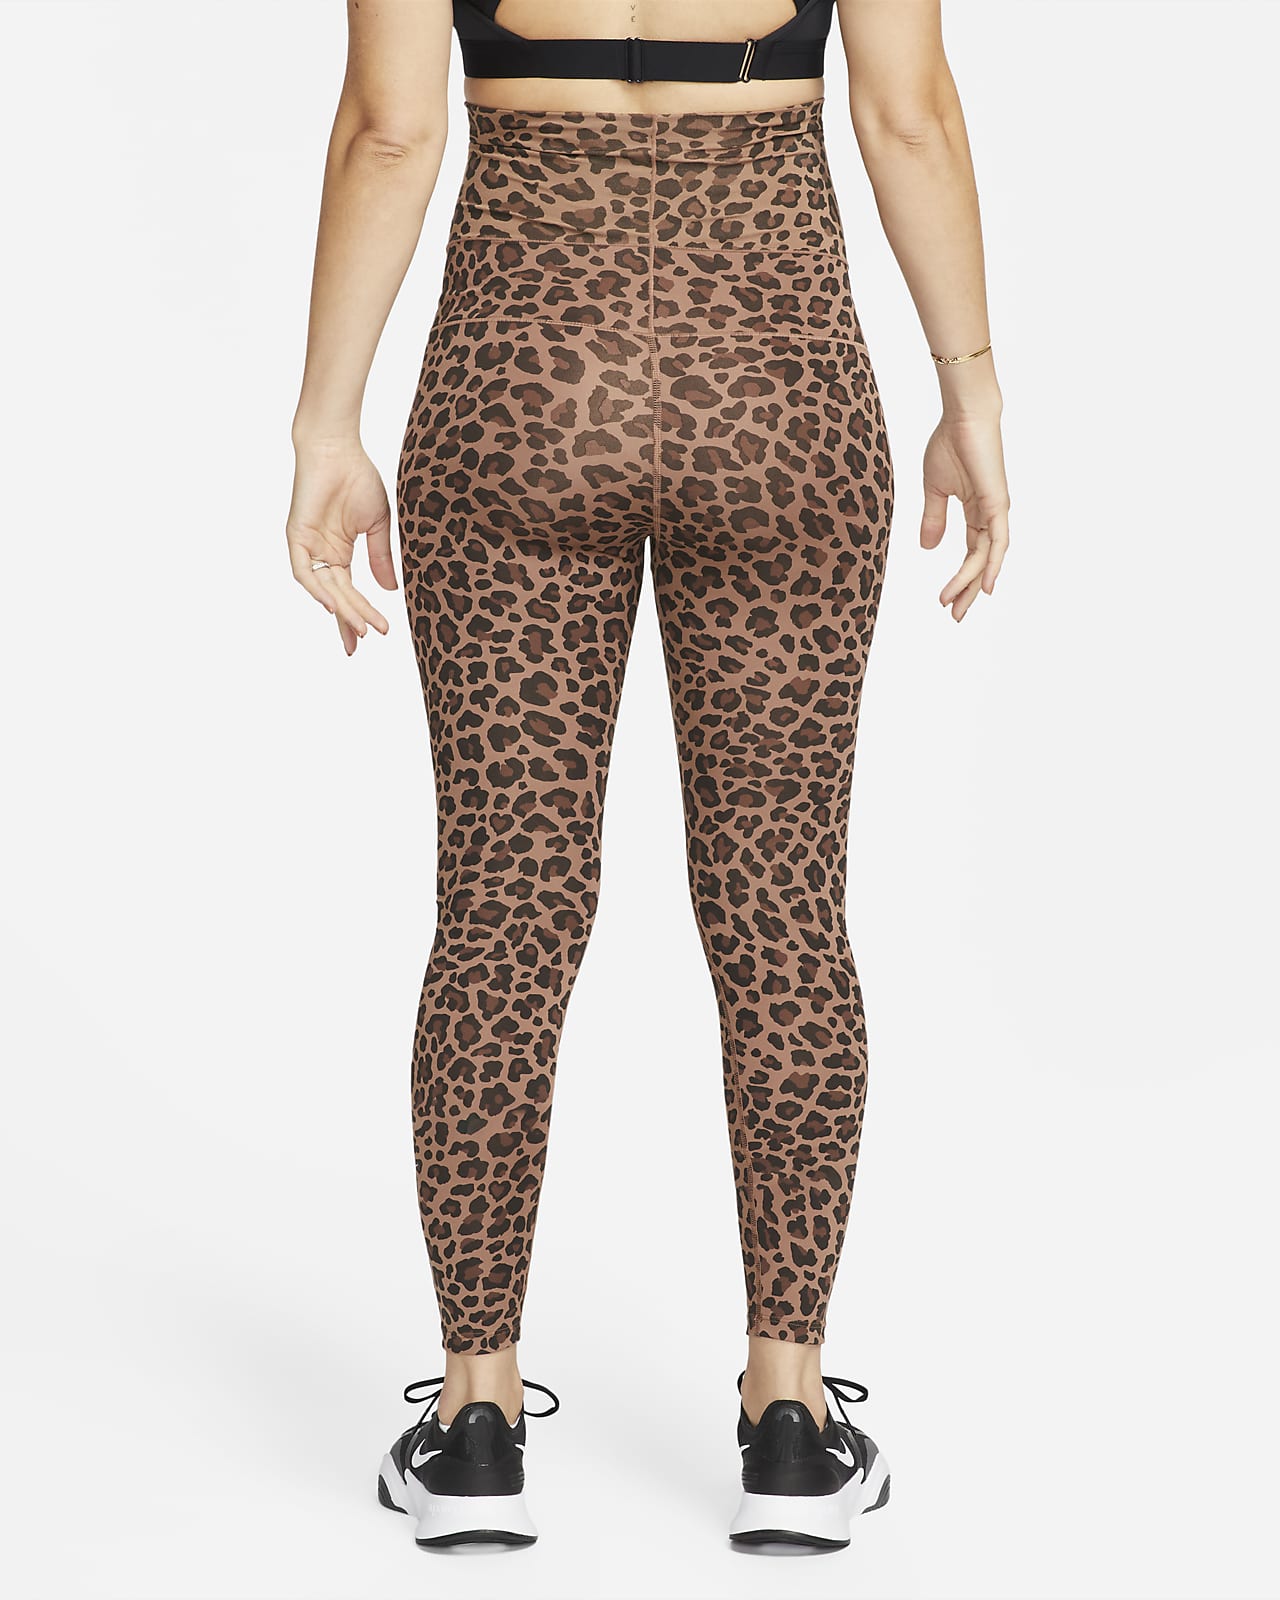 Positivo Respeto a ti mismo Sierra Nike One (M) Women's High-Waisted Leopard Print Leggings (Maternity). Nike  NL